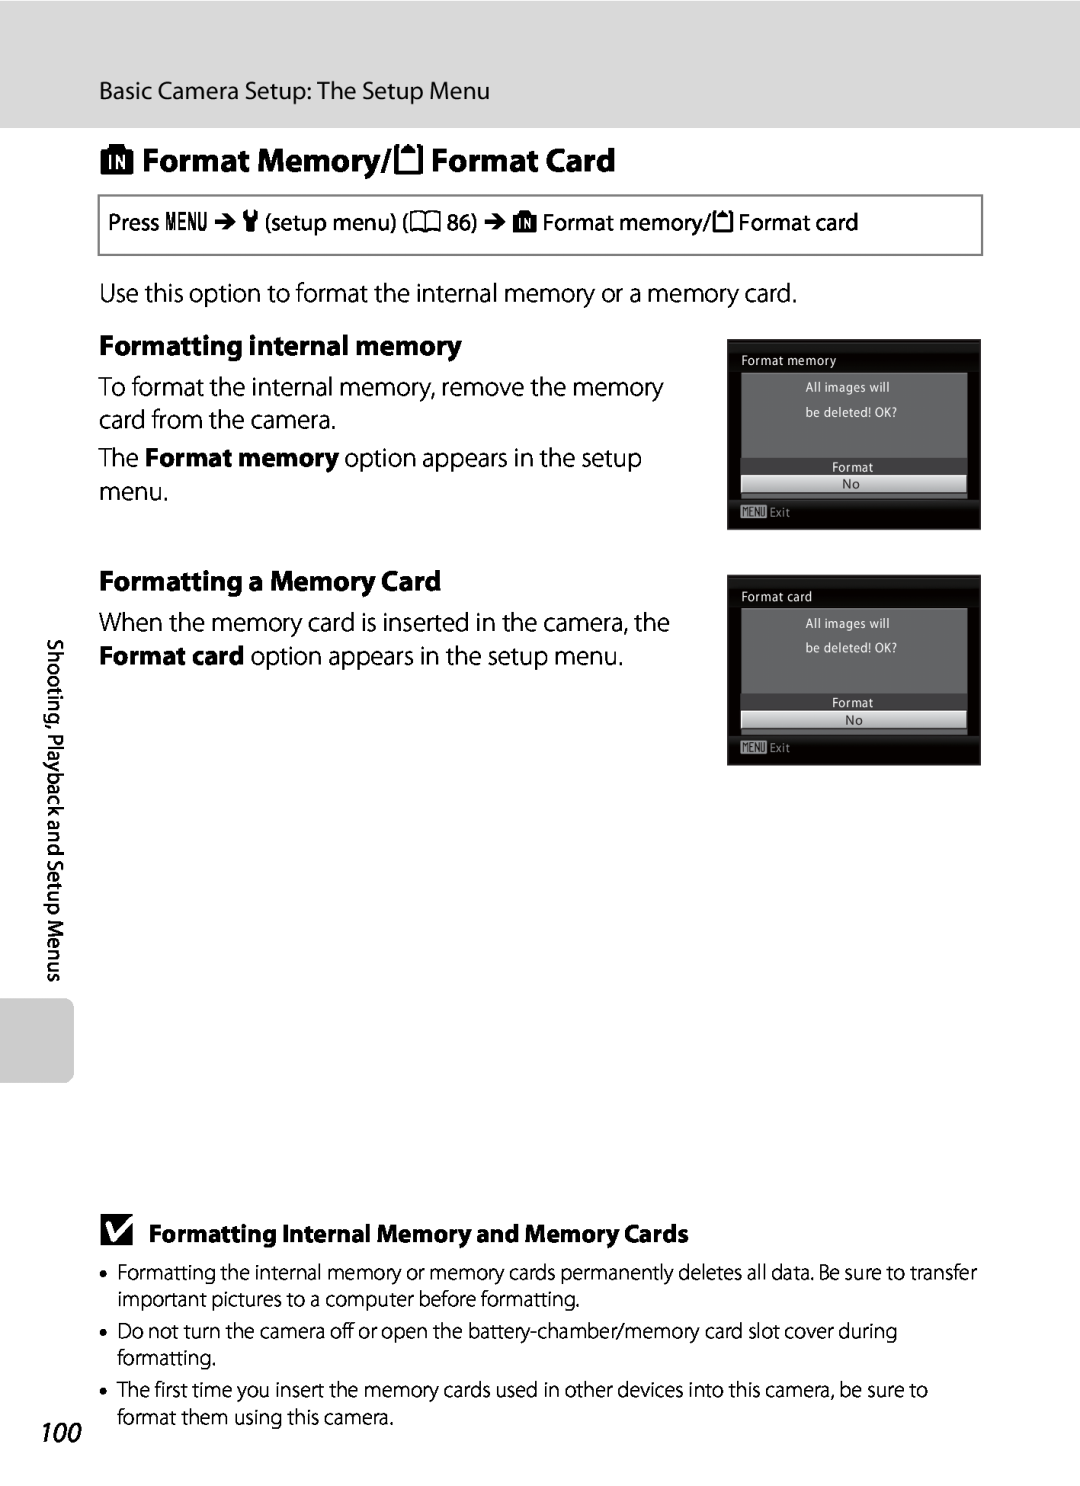 Nikon L21, COOLPIXL22R, COOLPIXL22BLK l Format Memory/mFormat Card, Formatting internal memory, Formatting a Memory Card 